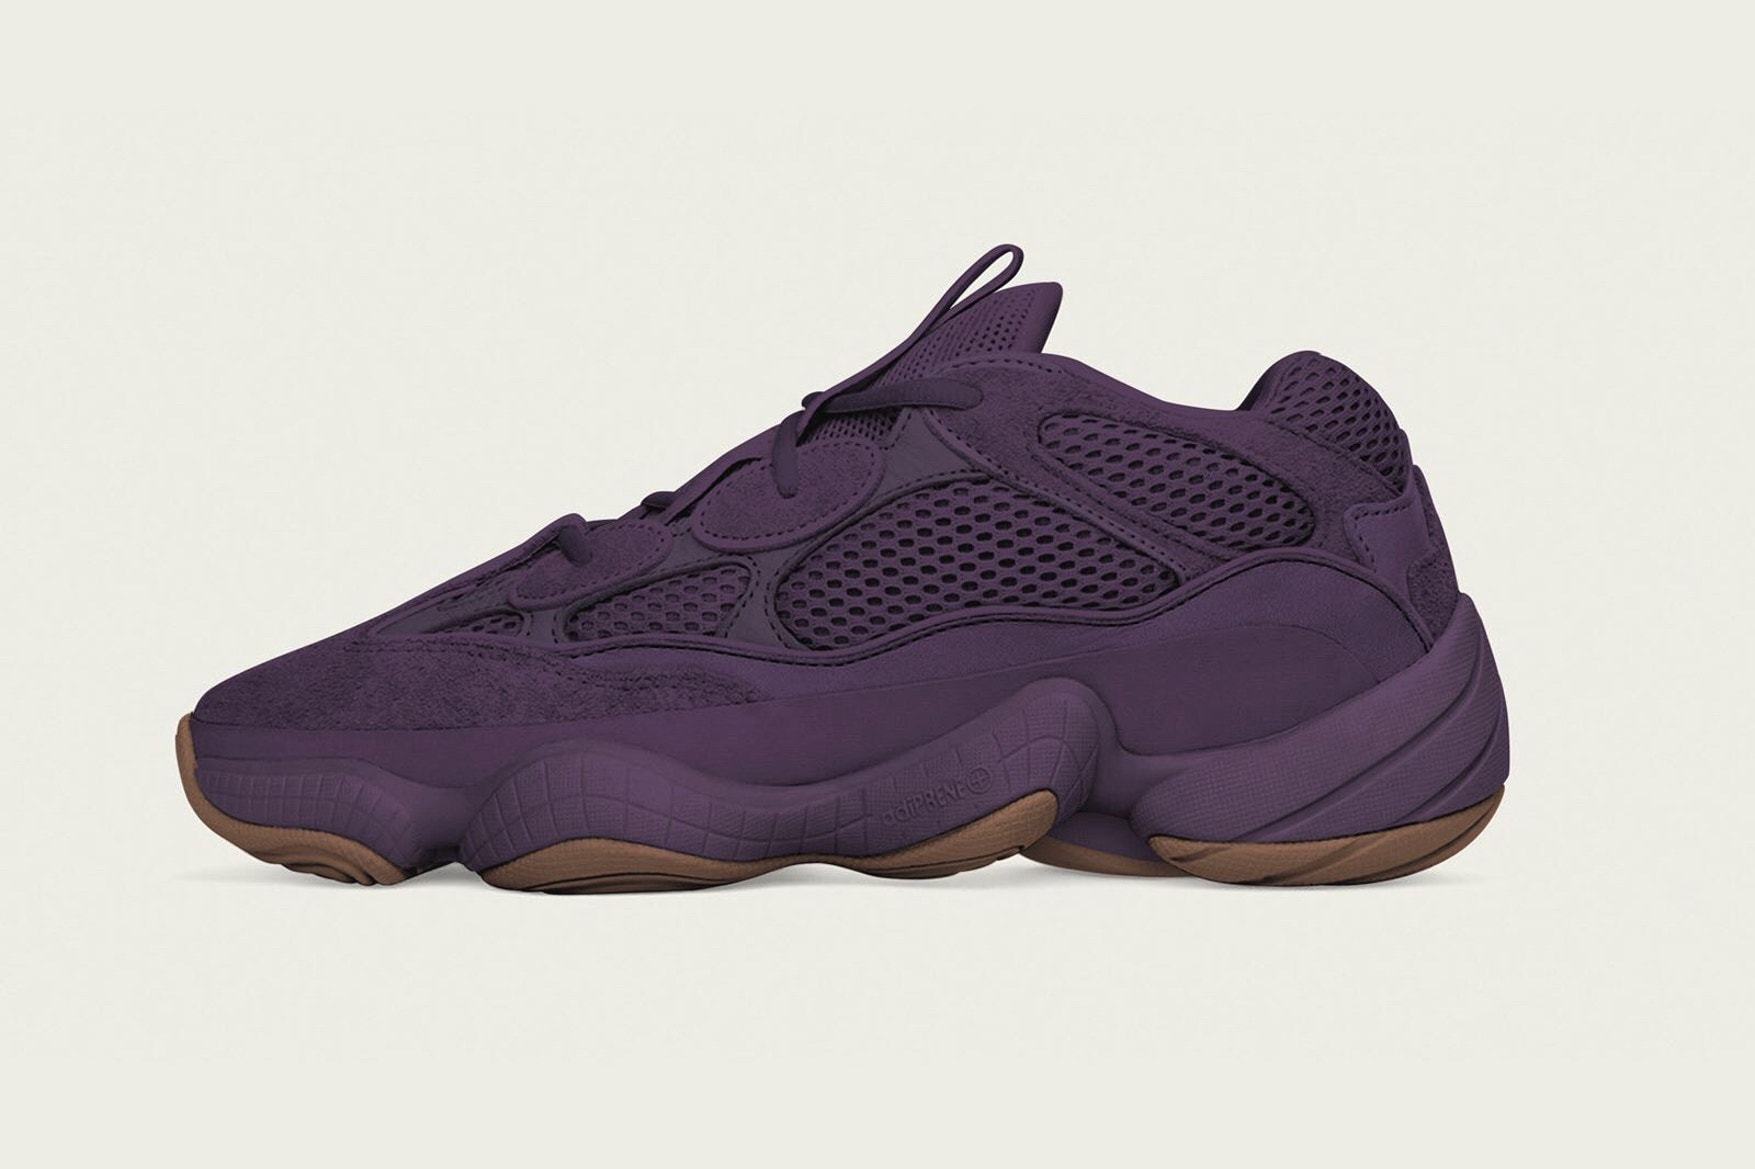 adidas YEEZY 500 "Ultraviolet" Kanye West Sneaker Desert Rat Chunky Shoe Suede Nubuck Leather Mesh Release Date